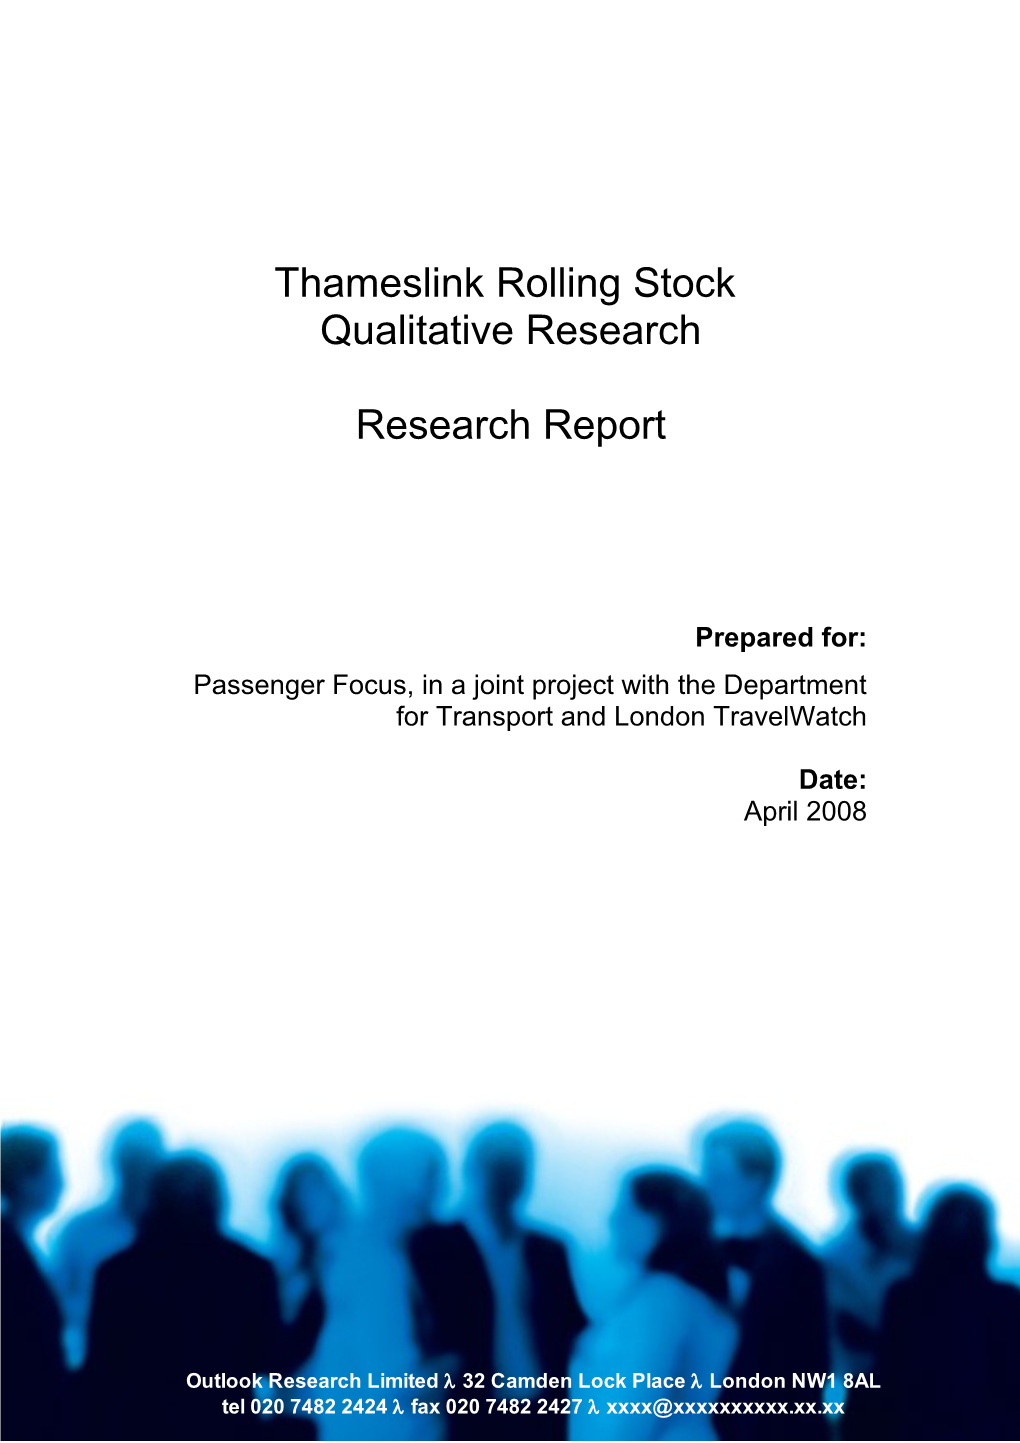 Thameslink Rolling Stock Passenger Focus